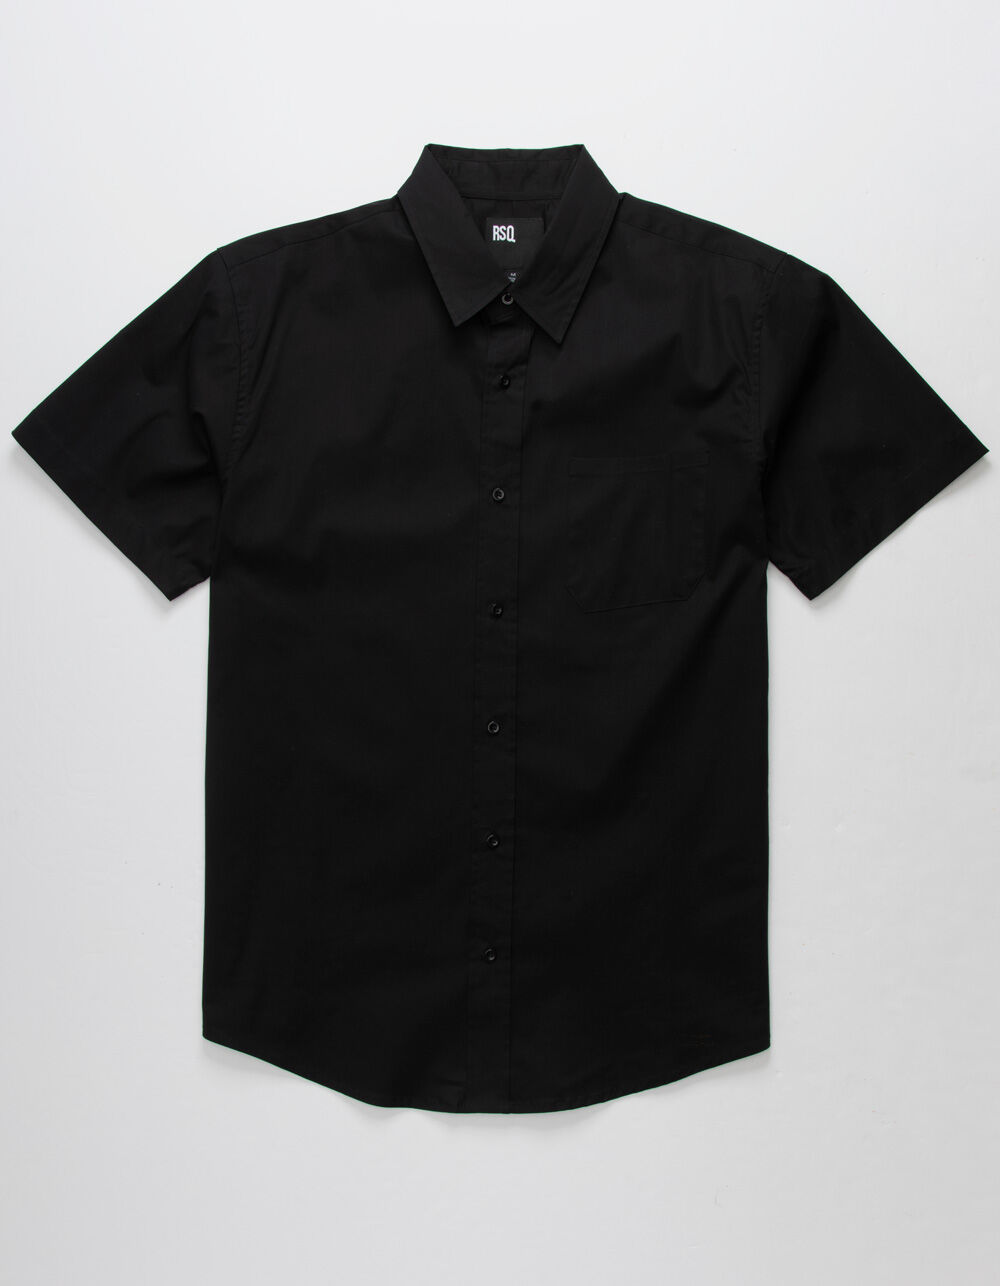 Rsq Solid Button Up Shirt - Black - Medium